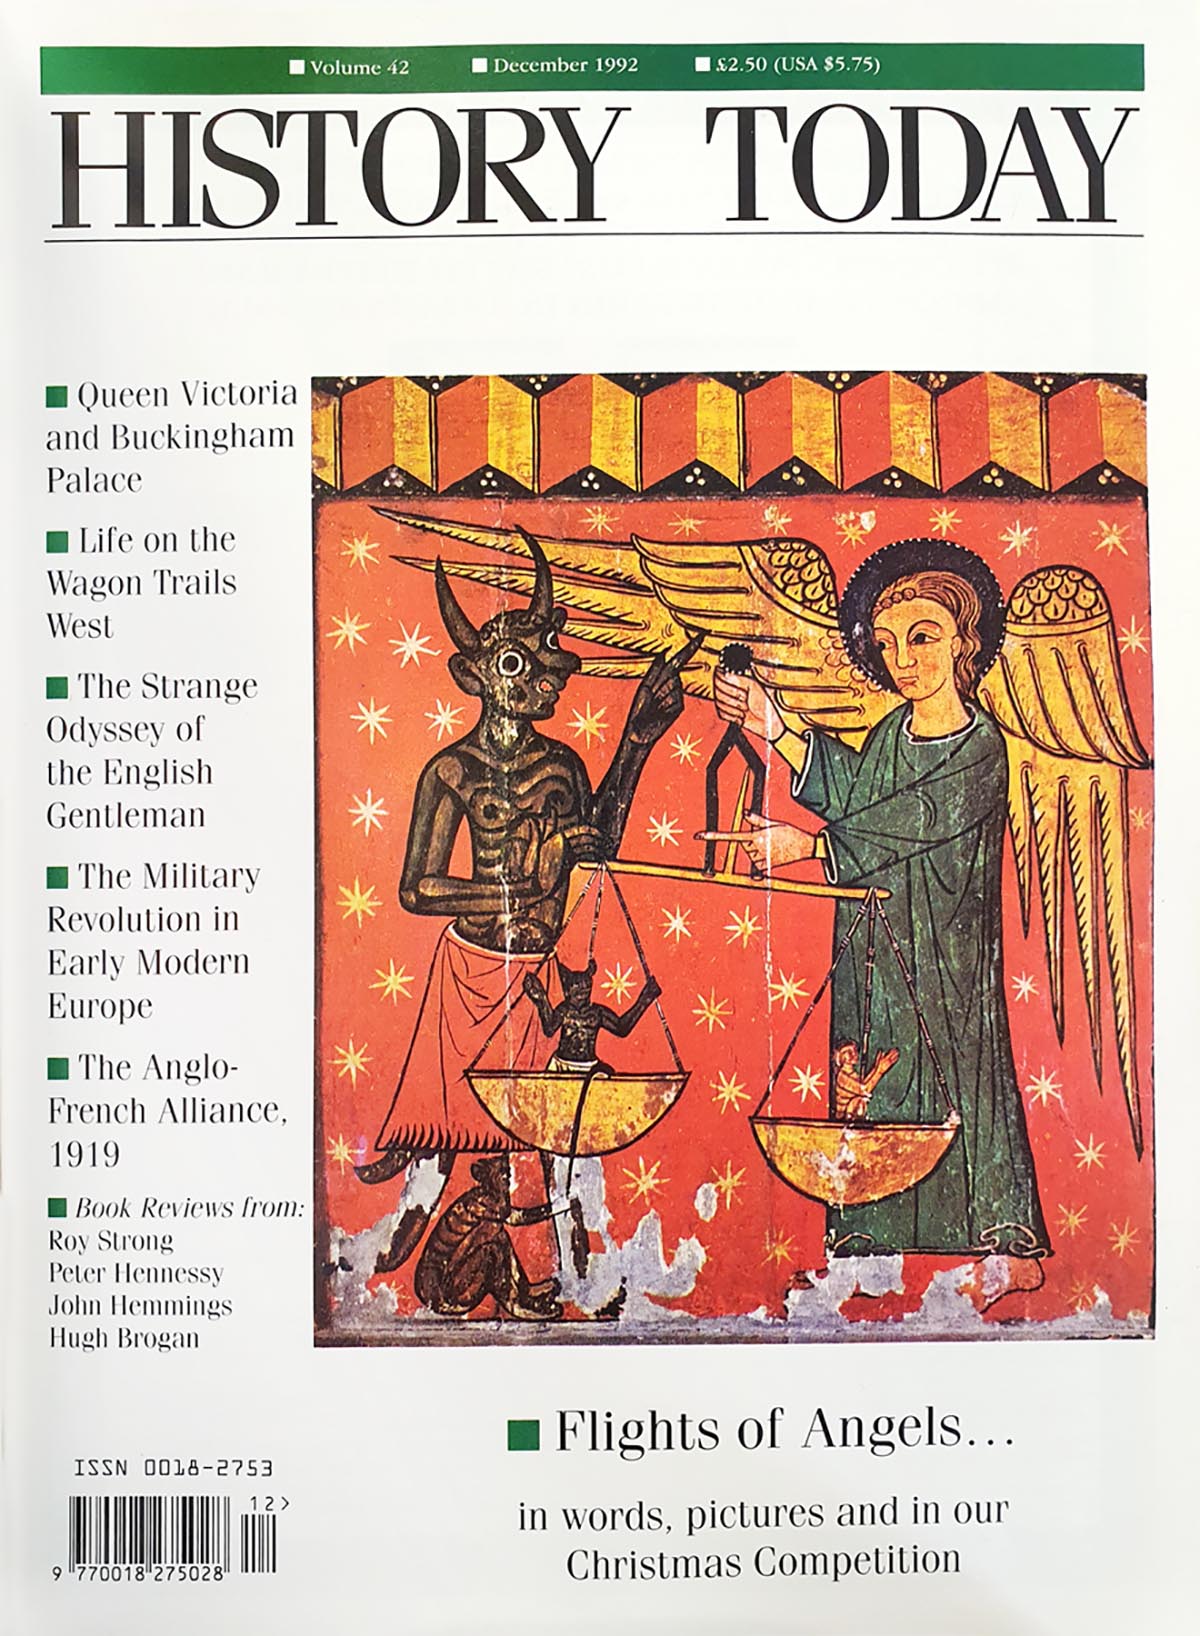 History Today Magazine Volume 42 February 1992 Images of French Kingship 